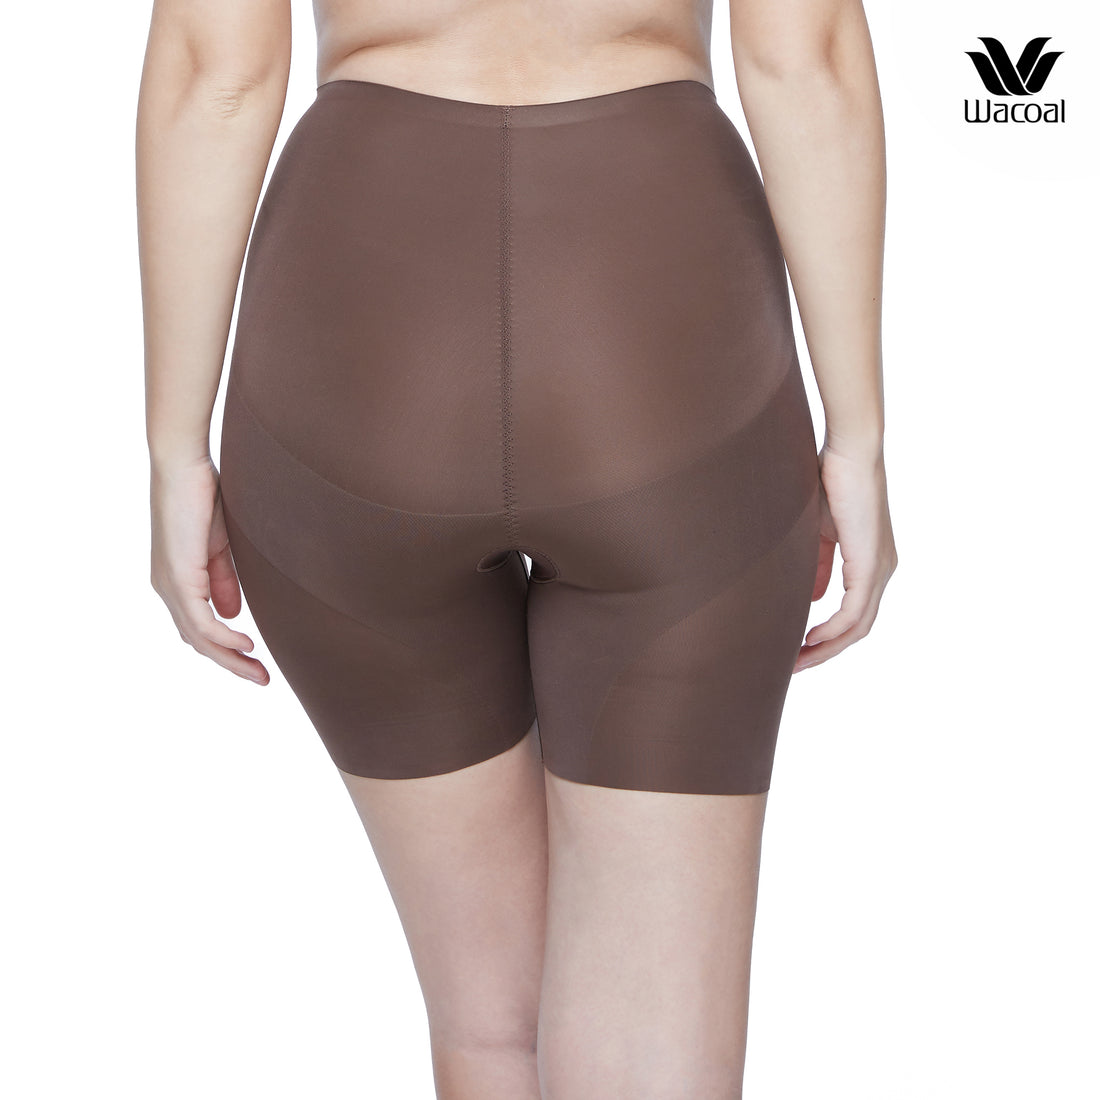 Wacoal Shape Beautifier Hips กางเกงเก็บกระชับแบบขายาว รุ่น WY1617 สีน้ำตาลไหม้ (BT)